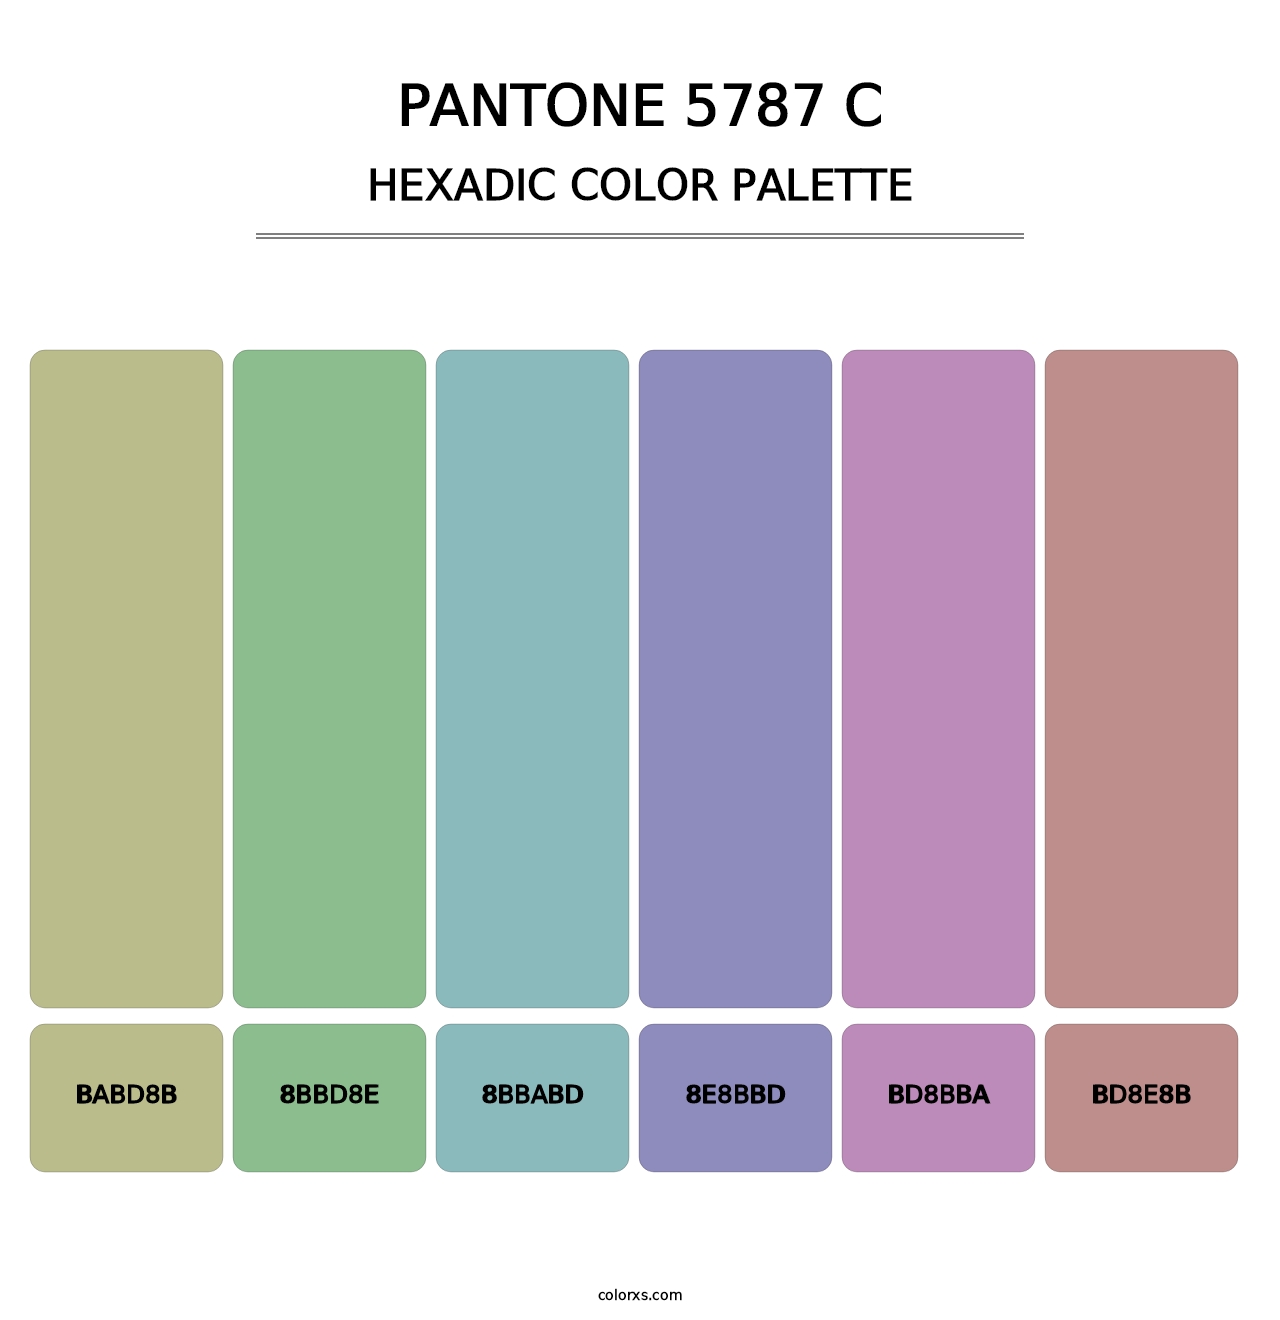 PANTONE 5787 C - Hexadic Color Palette